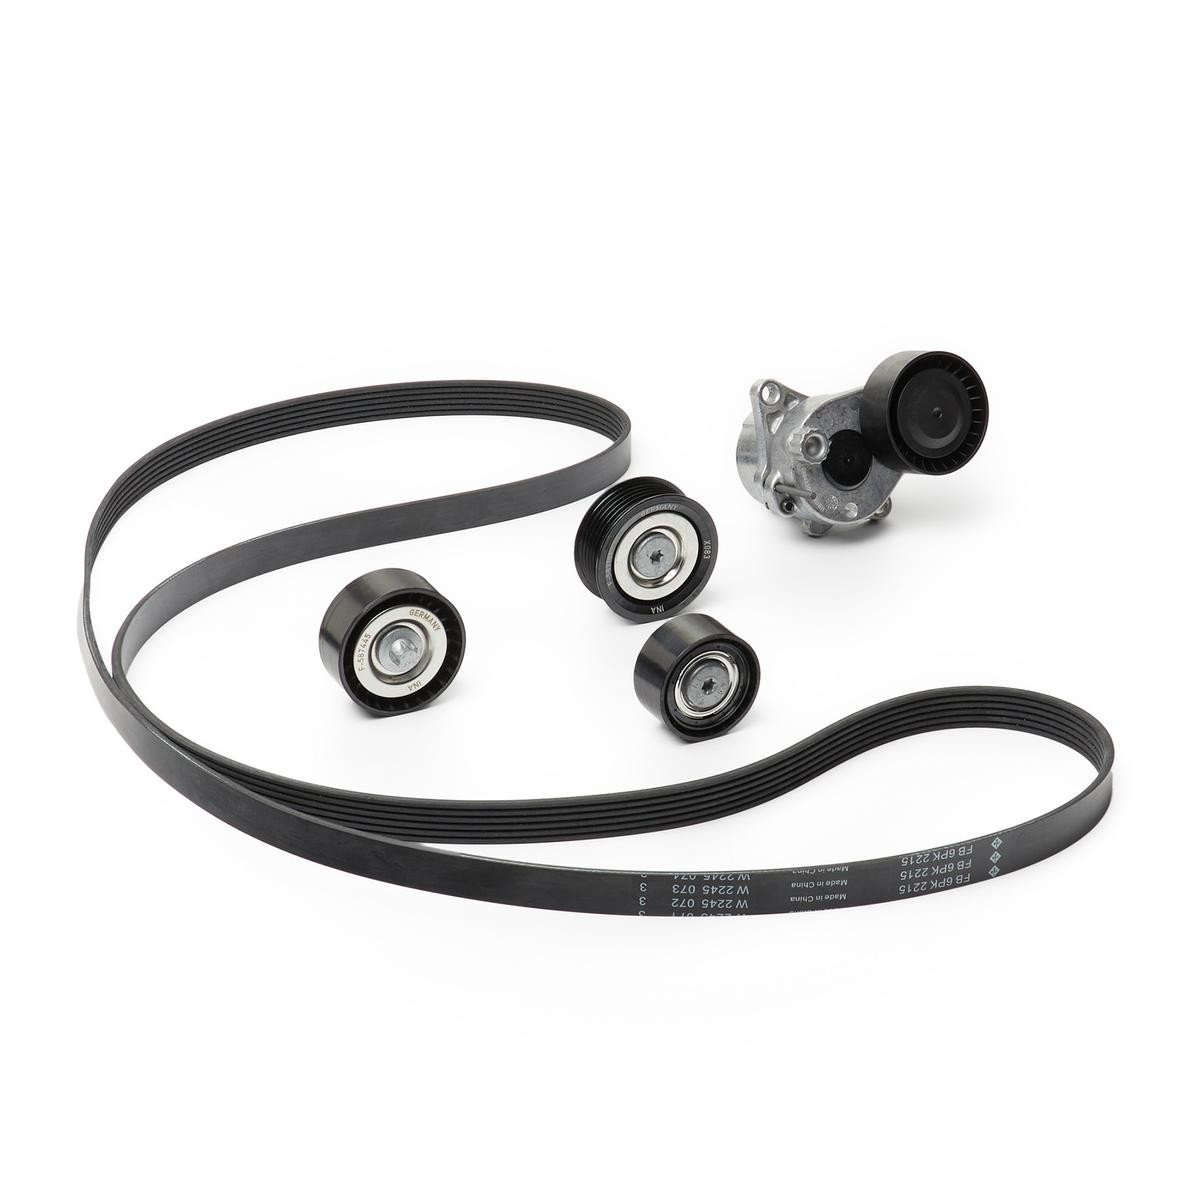 529 0361 10 INA Serpentine belt kit PORSCHE Check alternator freewheel clutch & replace if necessary